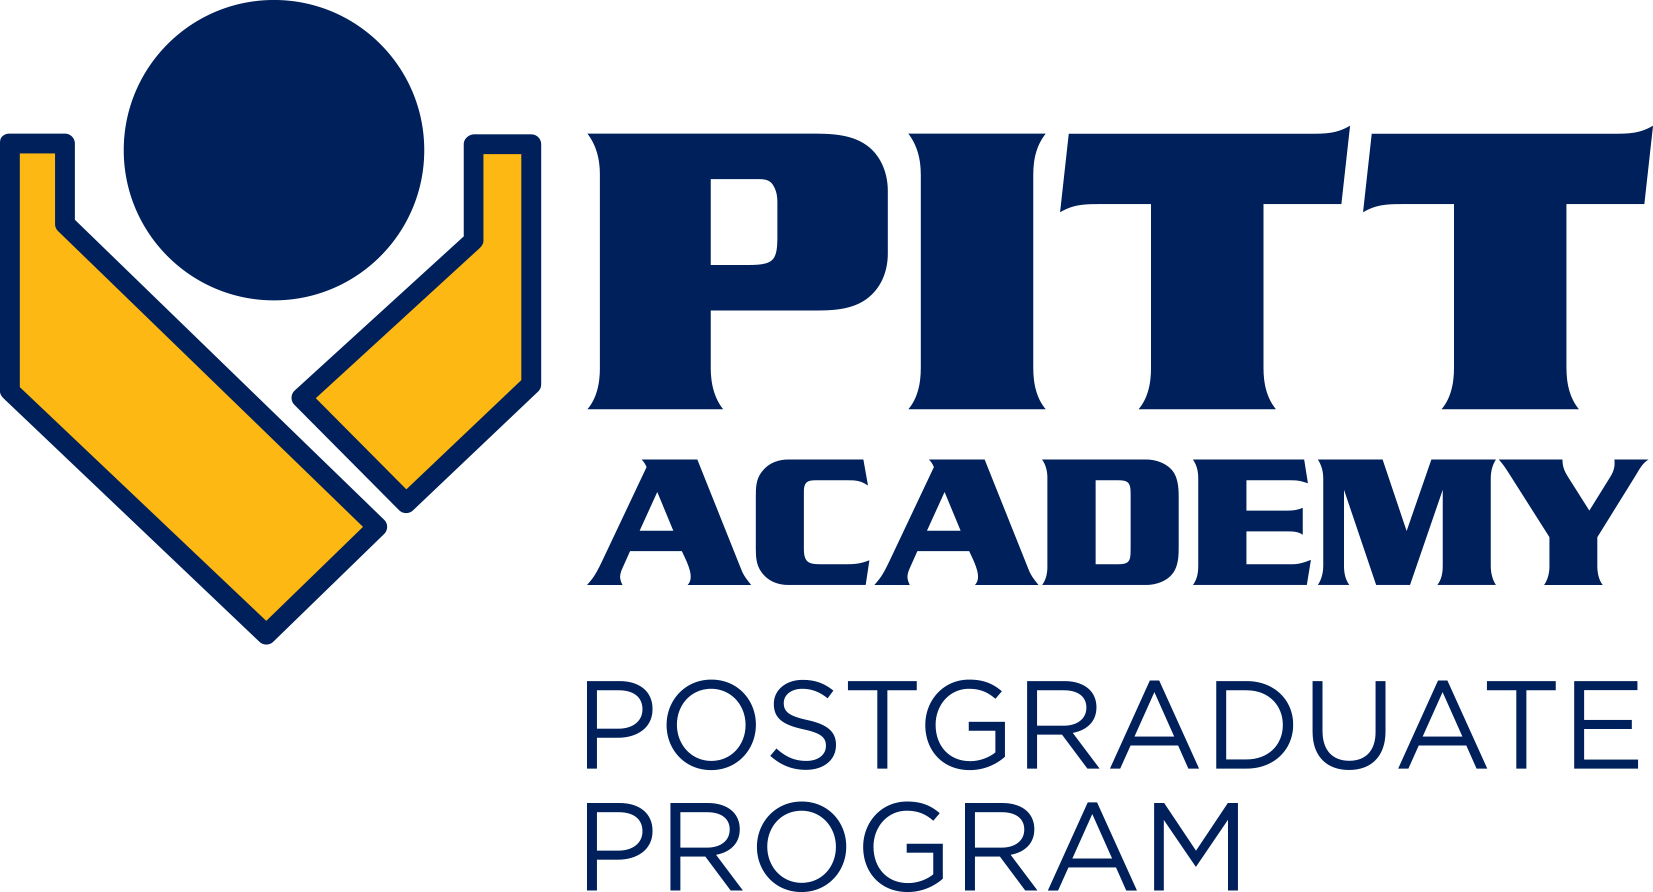 Pitt Academy